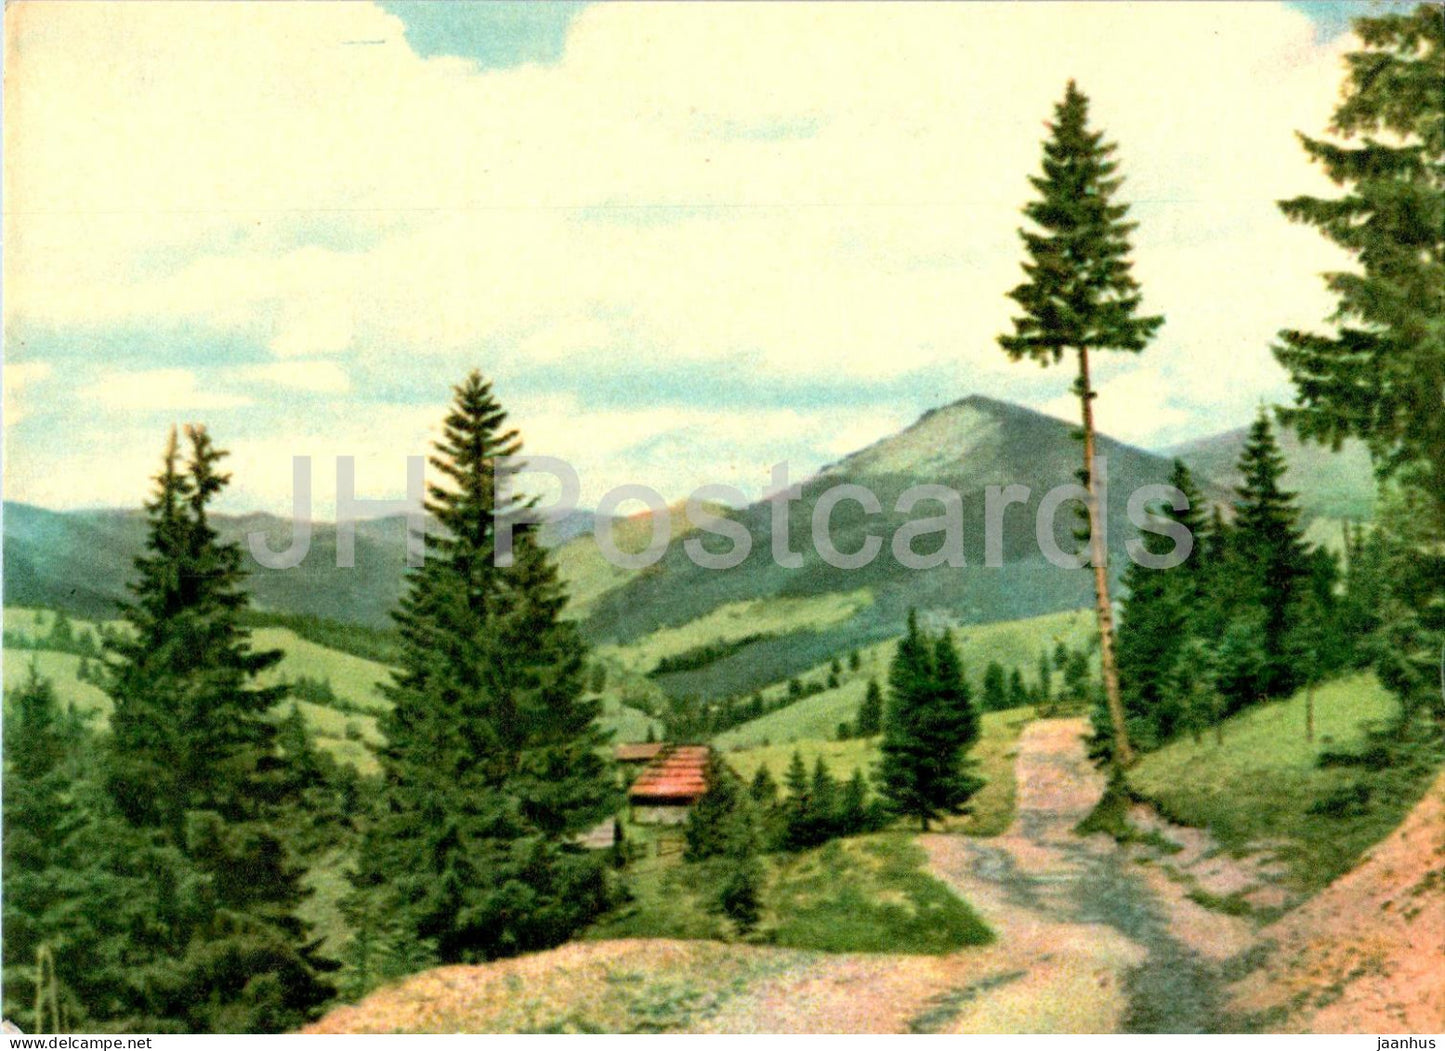 Carpathian Mountains - Road in the Carpathians - 1967 - Ukraine USSR - unused - JH Postcards